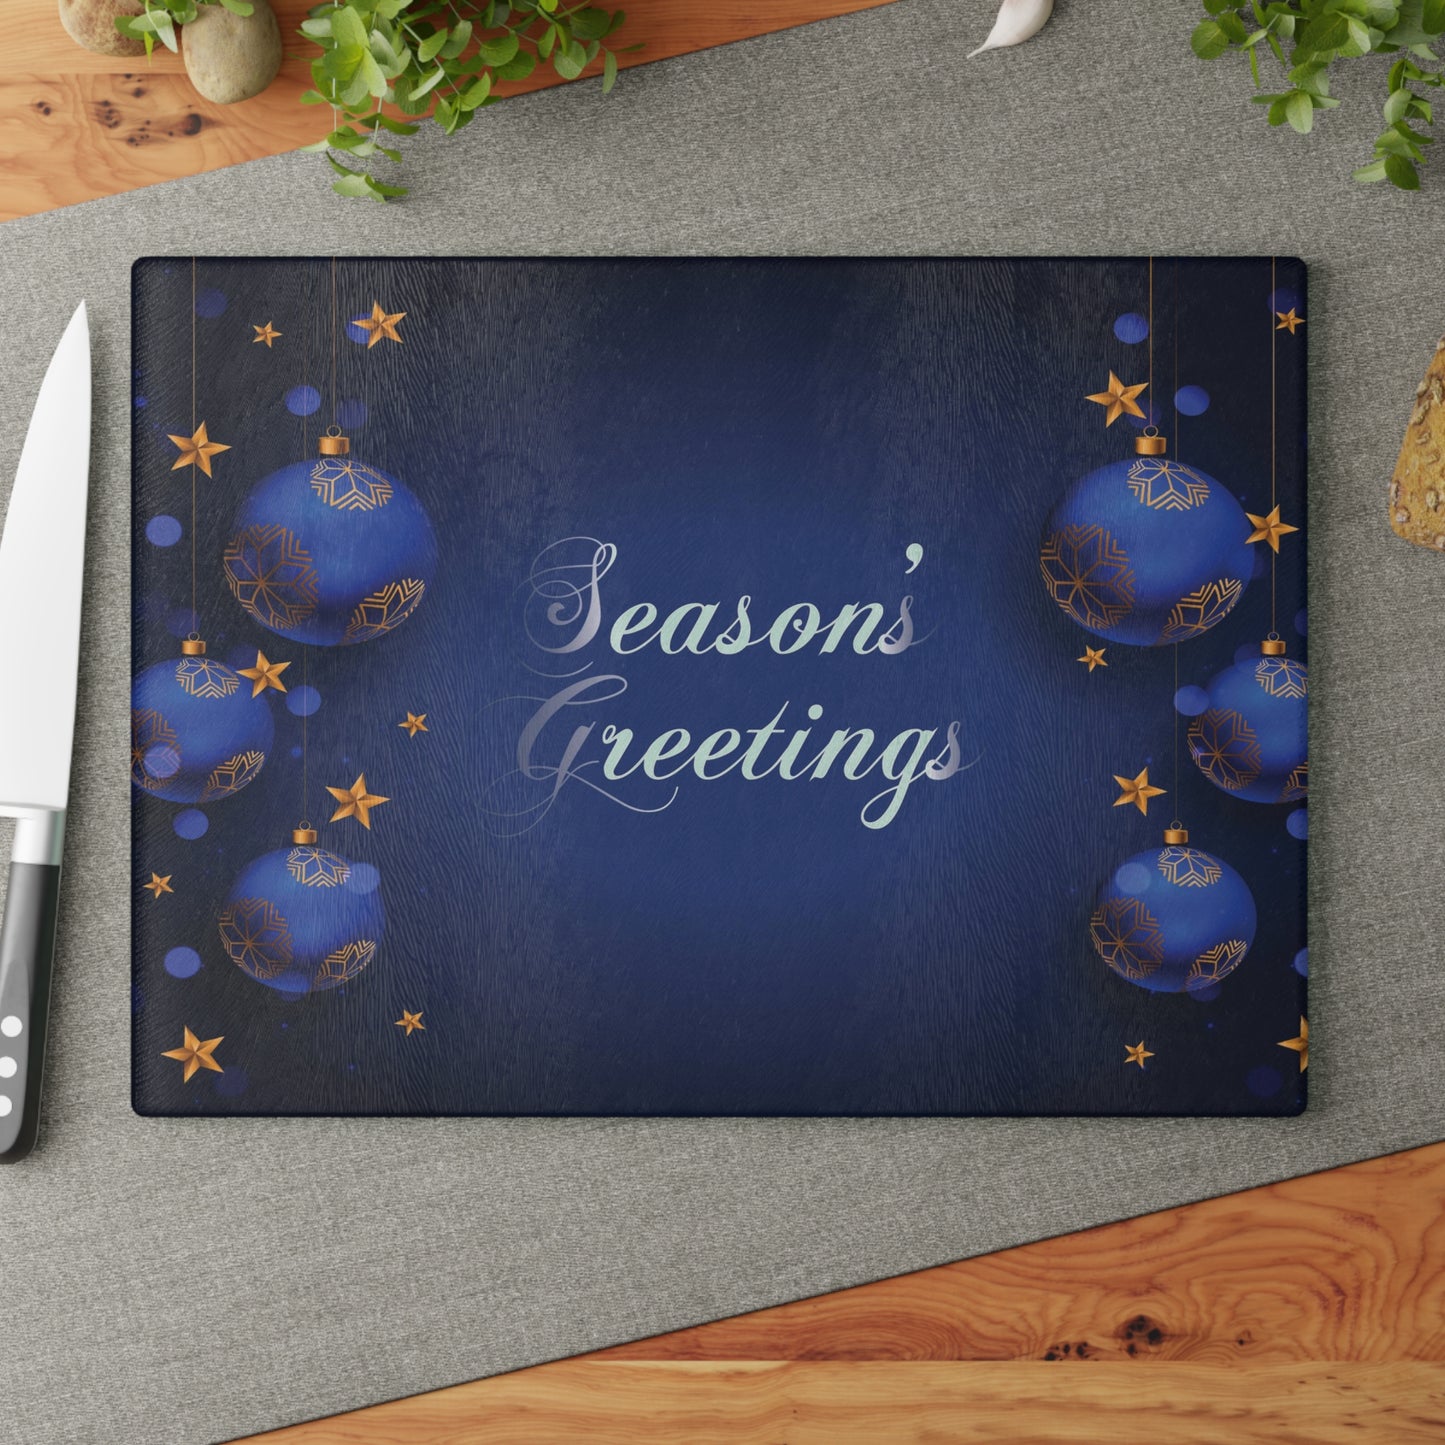 Season;s Greetings Glass Cutting Board, Blue